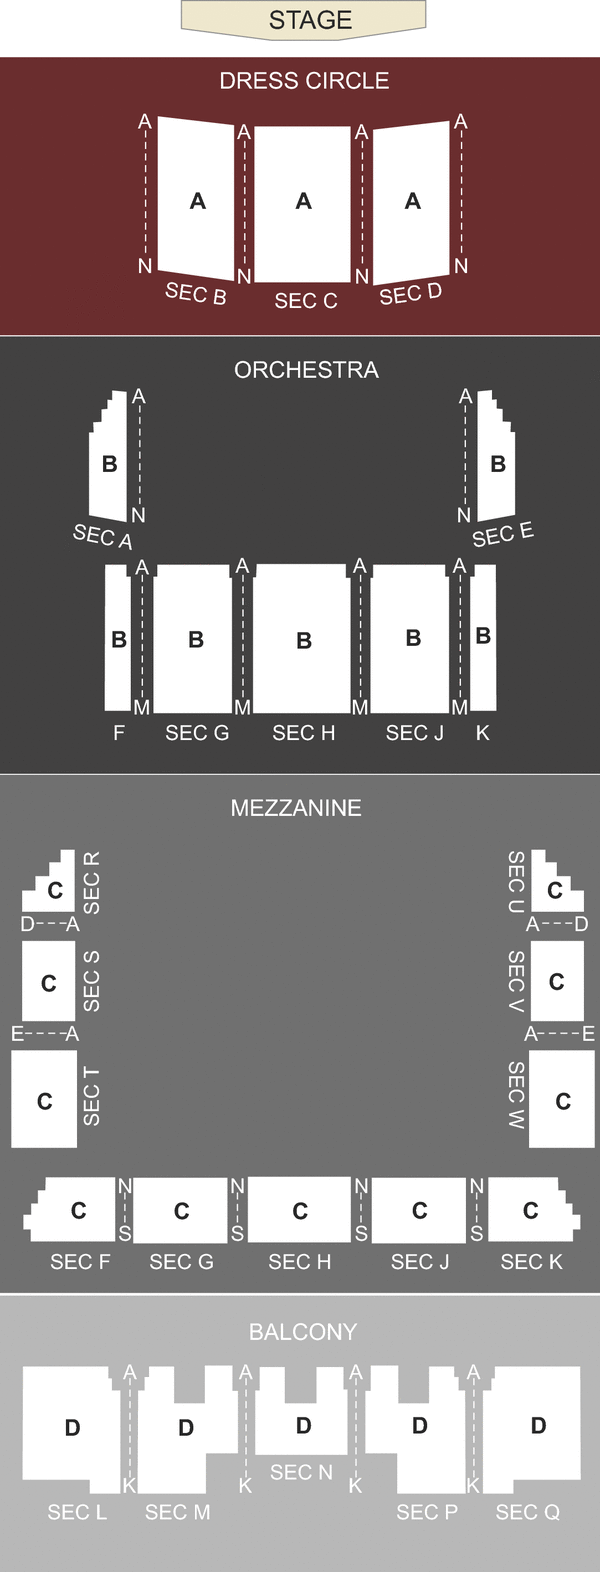 Raleigh Memorial Auditorium Seating Chart